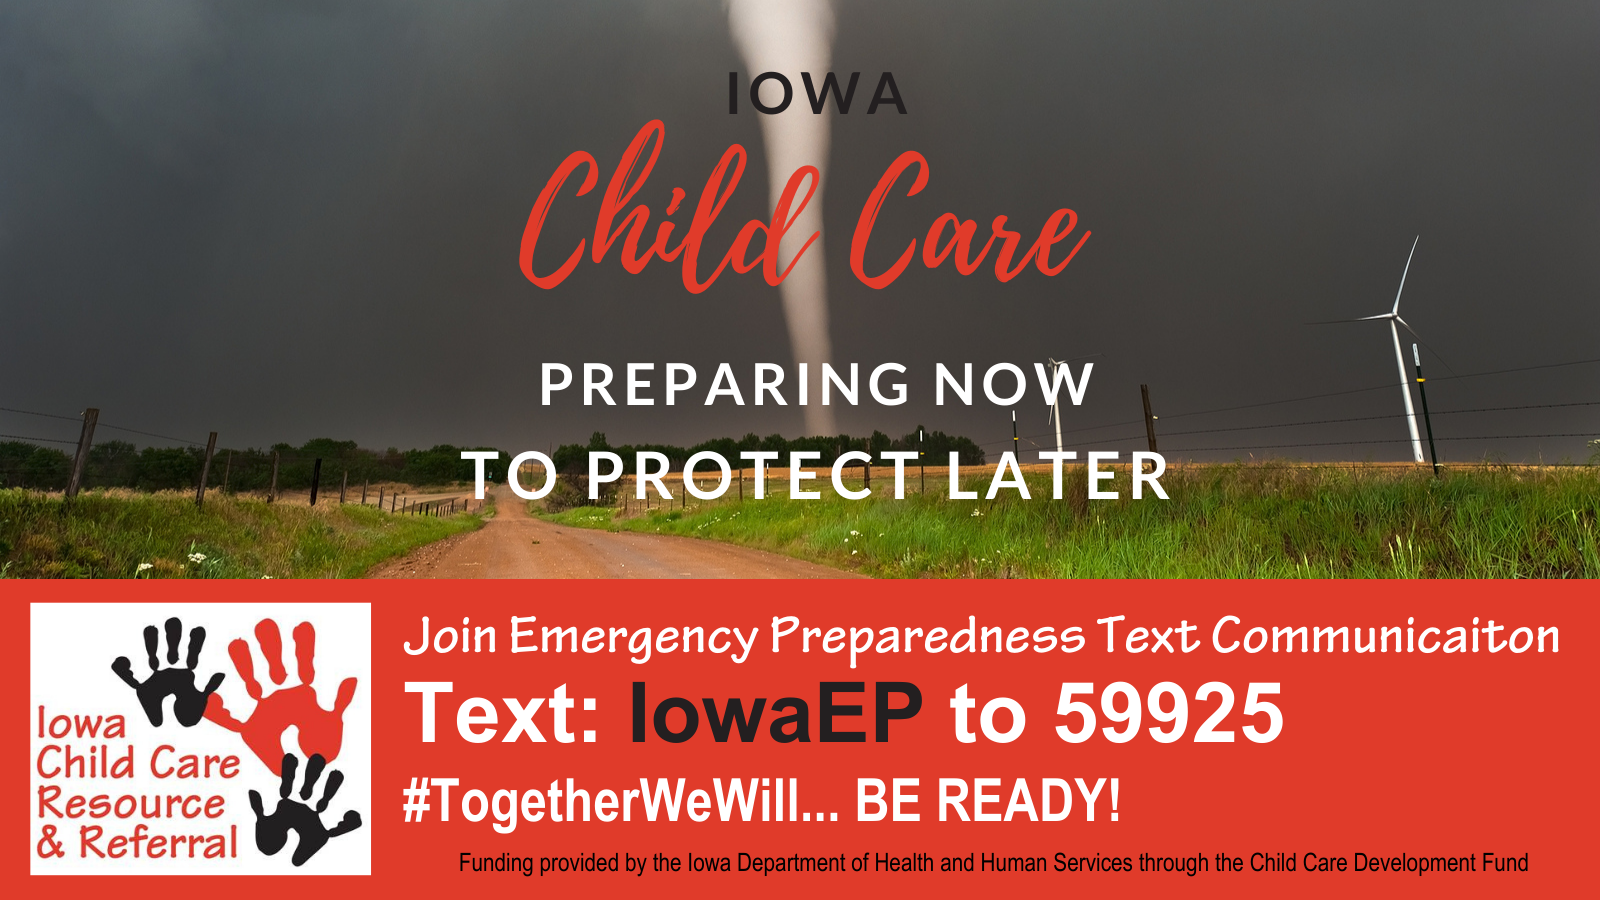 Guest Blog: Iowa CCR&R’s Emergency Preparedness Campaign